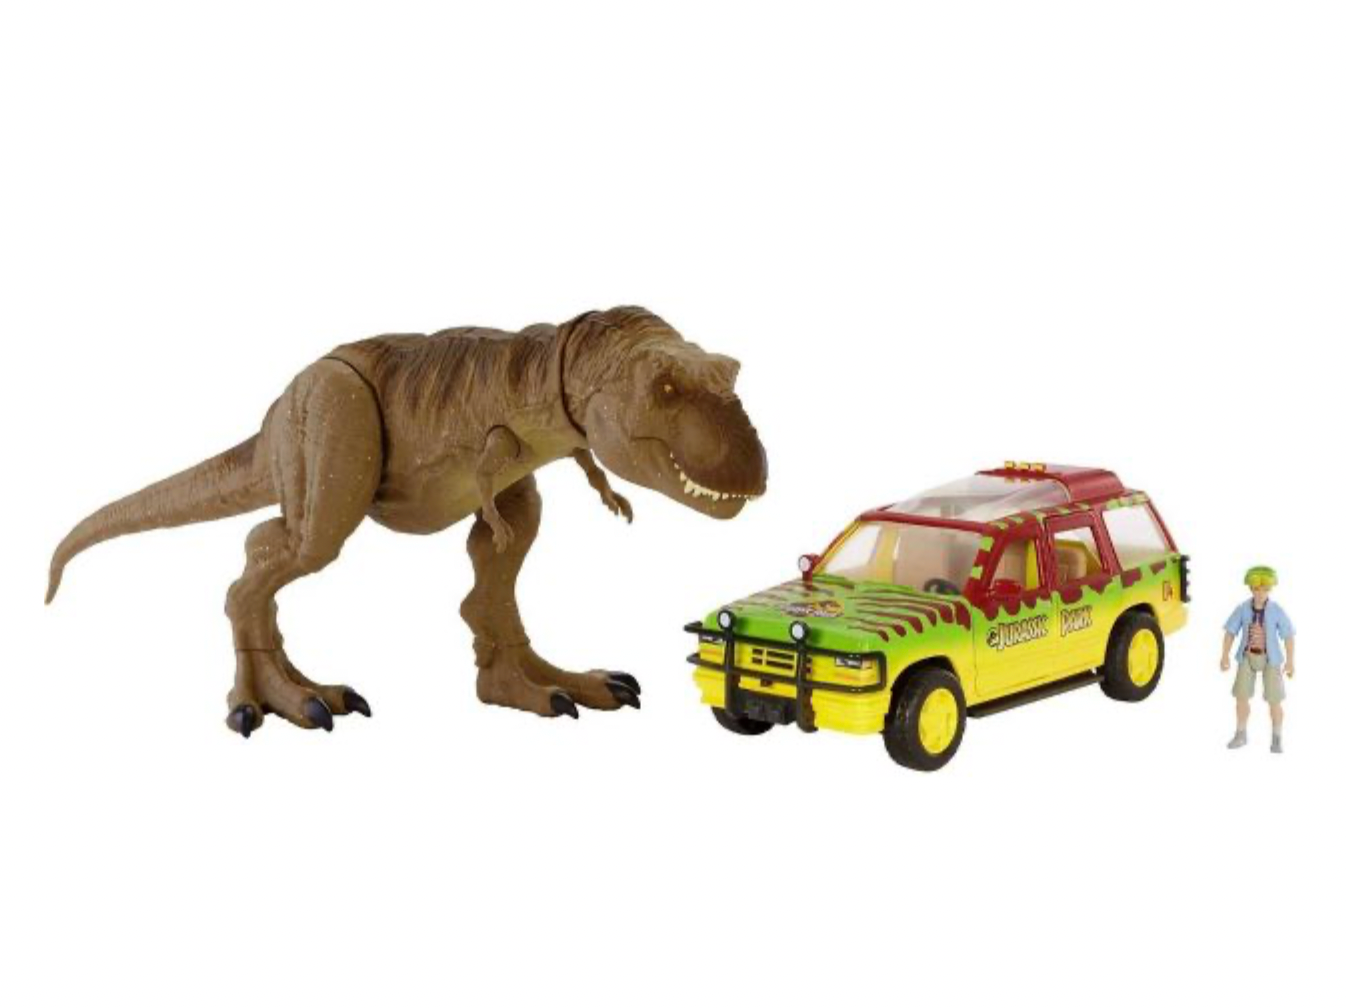 Jurassic World Legacy Tyrannosaurus Rex Ambush Toy Vehicle And